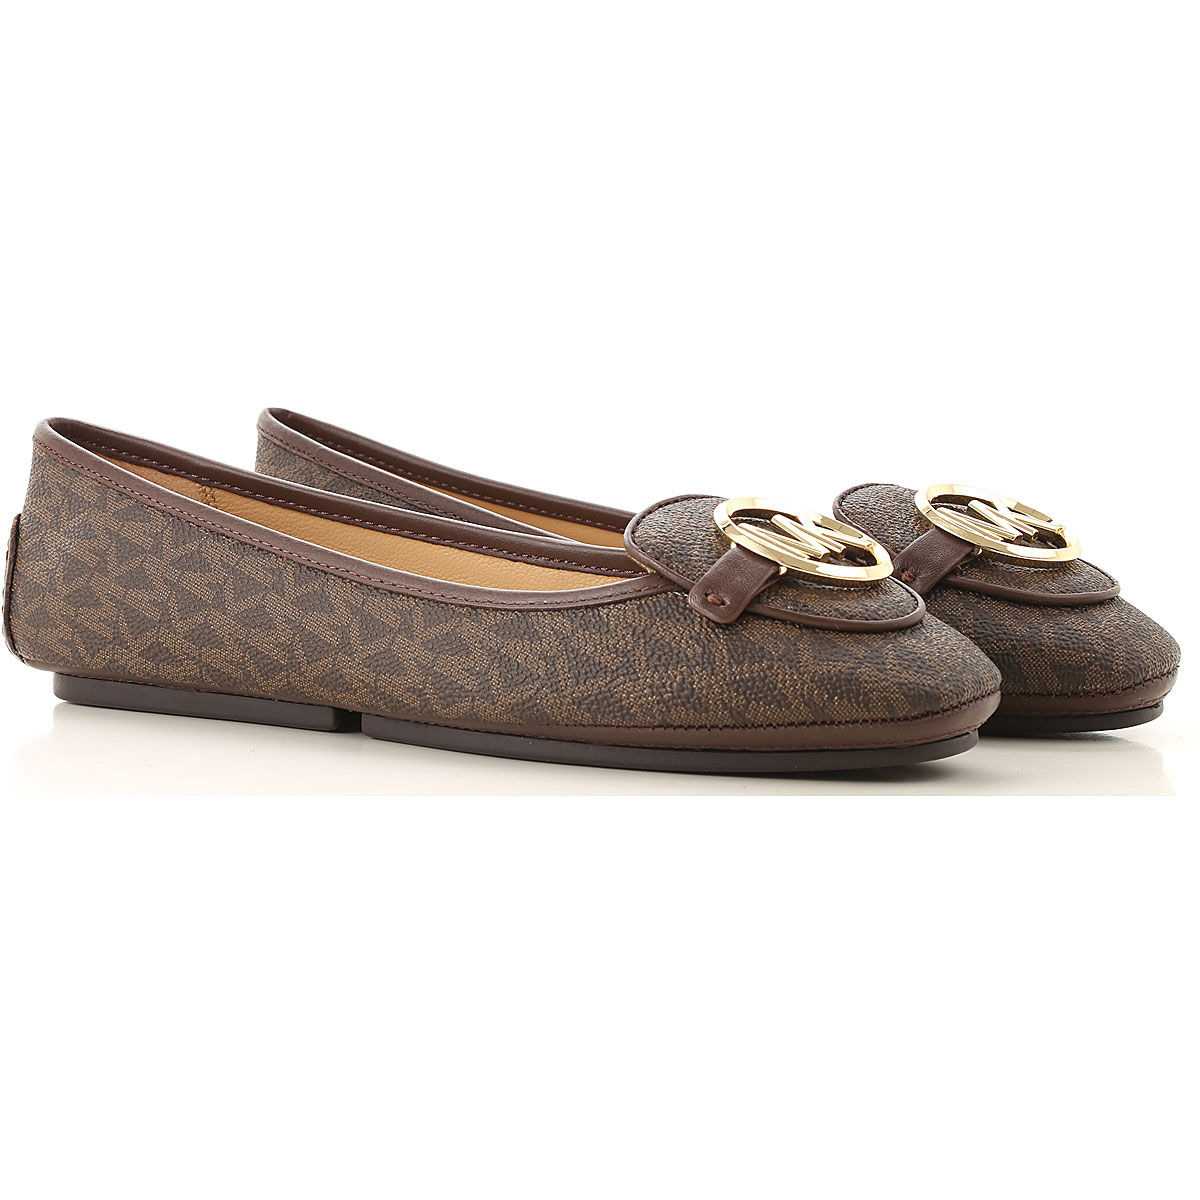 Womens Shoes Michael Kors, Style code: 40r9lifp3b-brown-